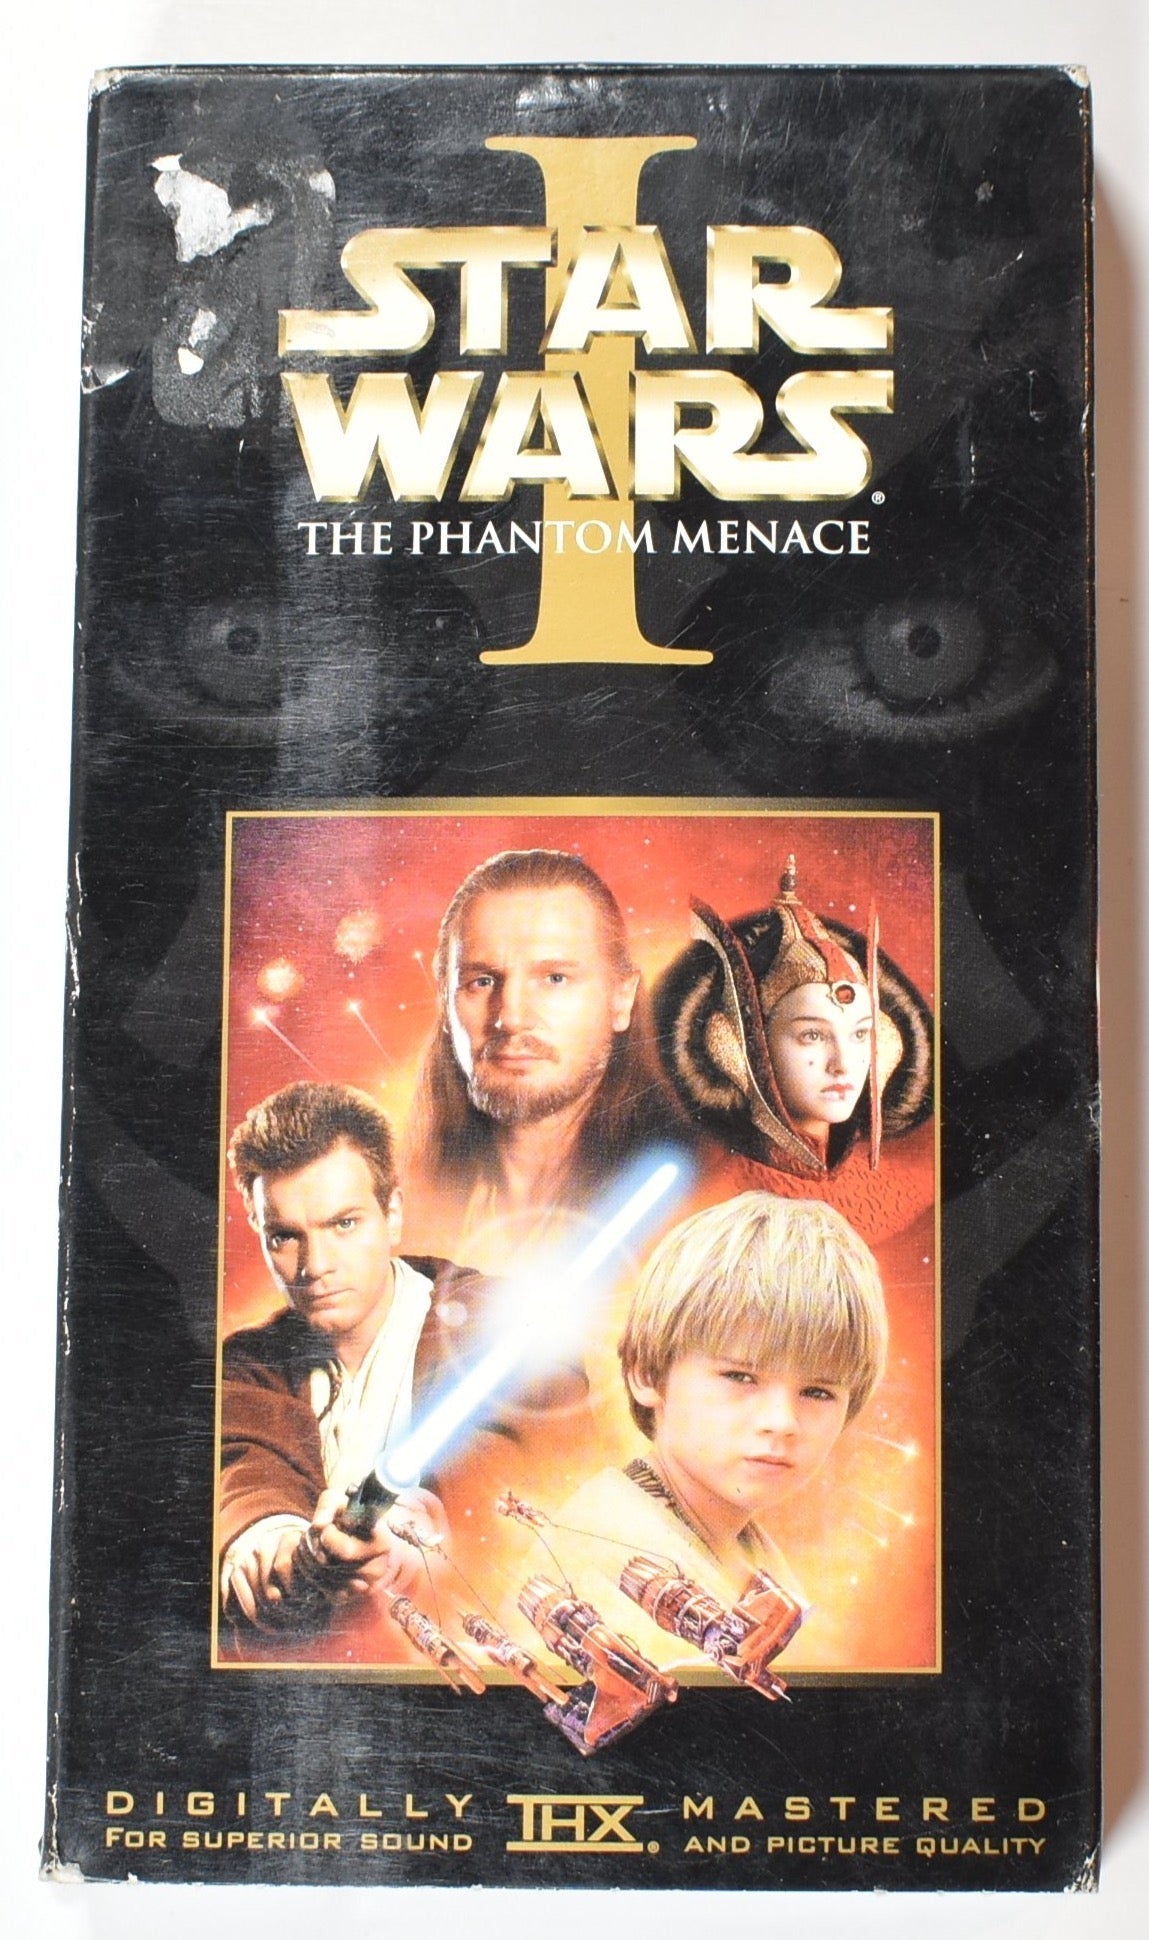 Star Wars episode 1 VHS Tape Movie The Phantom Menace used